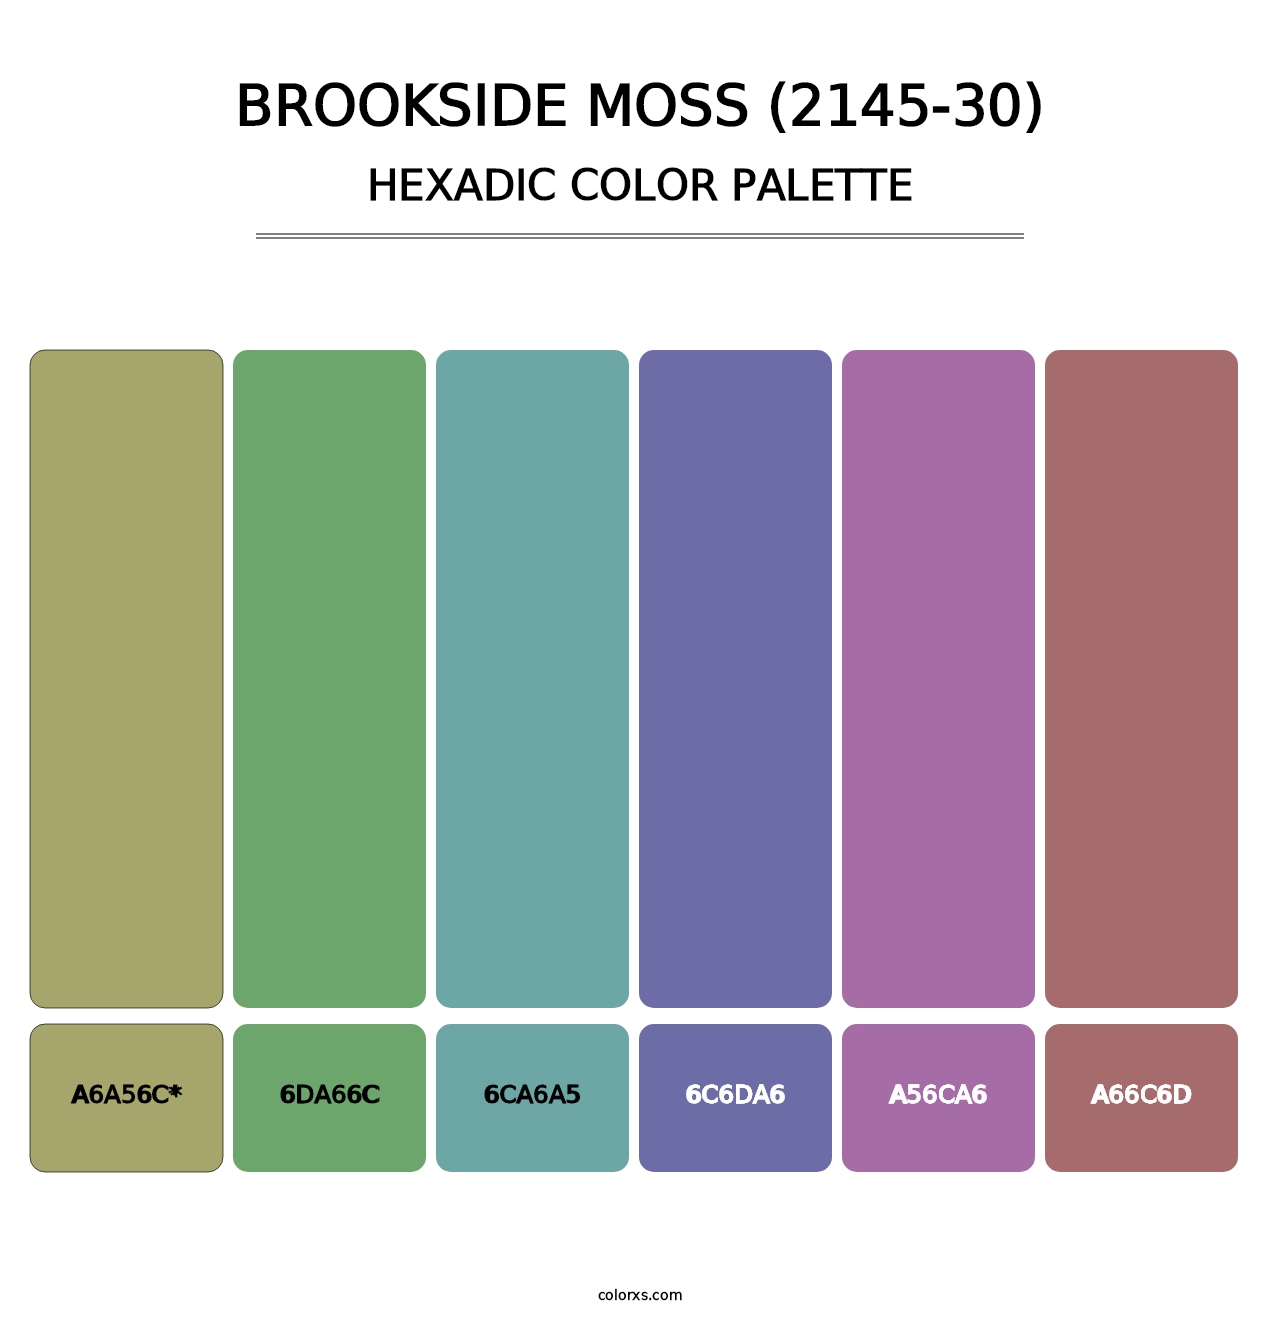 Brookside Moss (2145-30) - Hexadic Color Palette